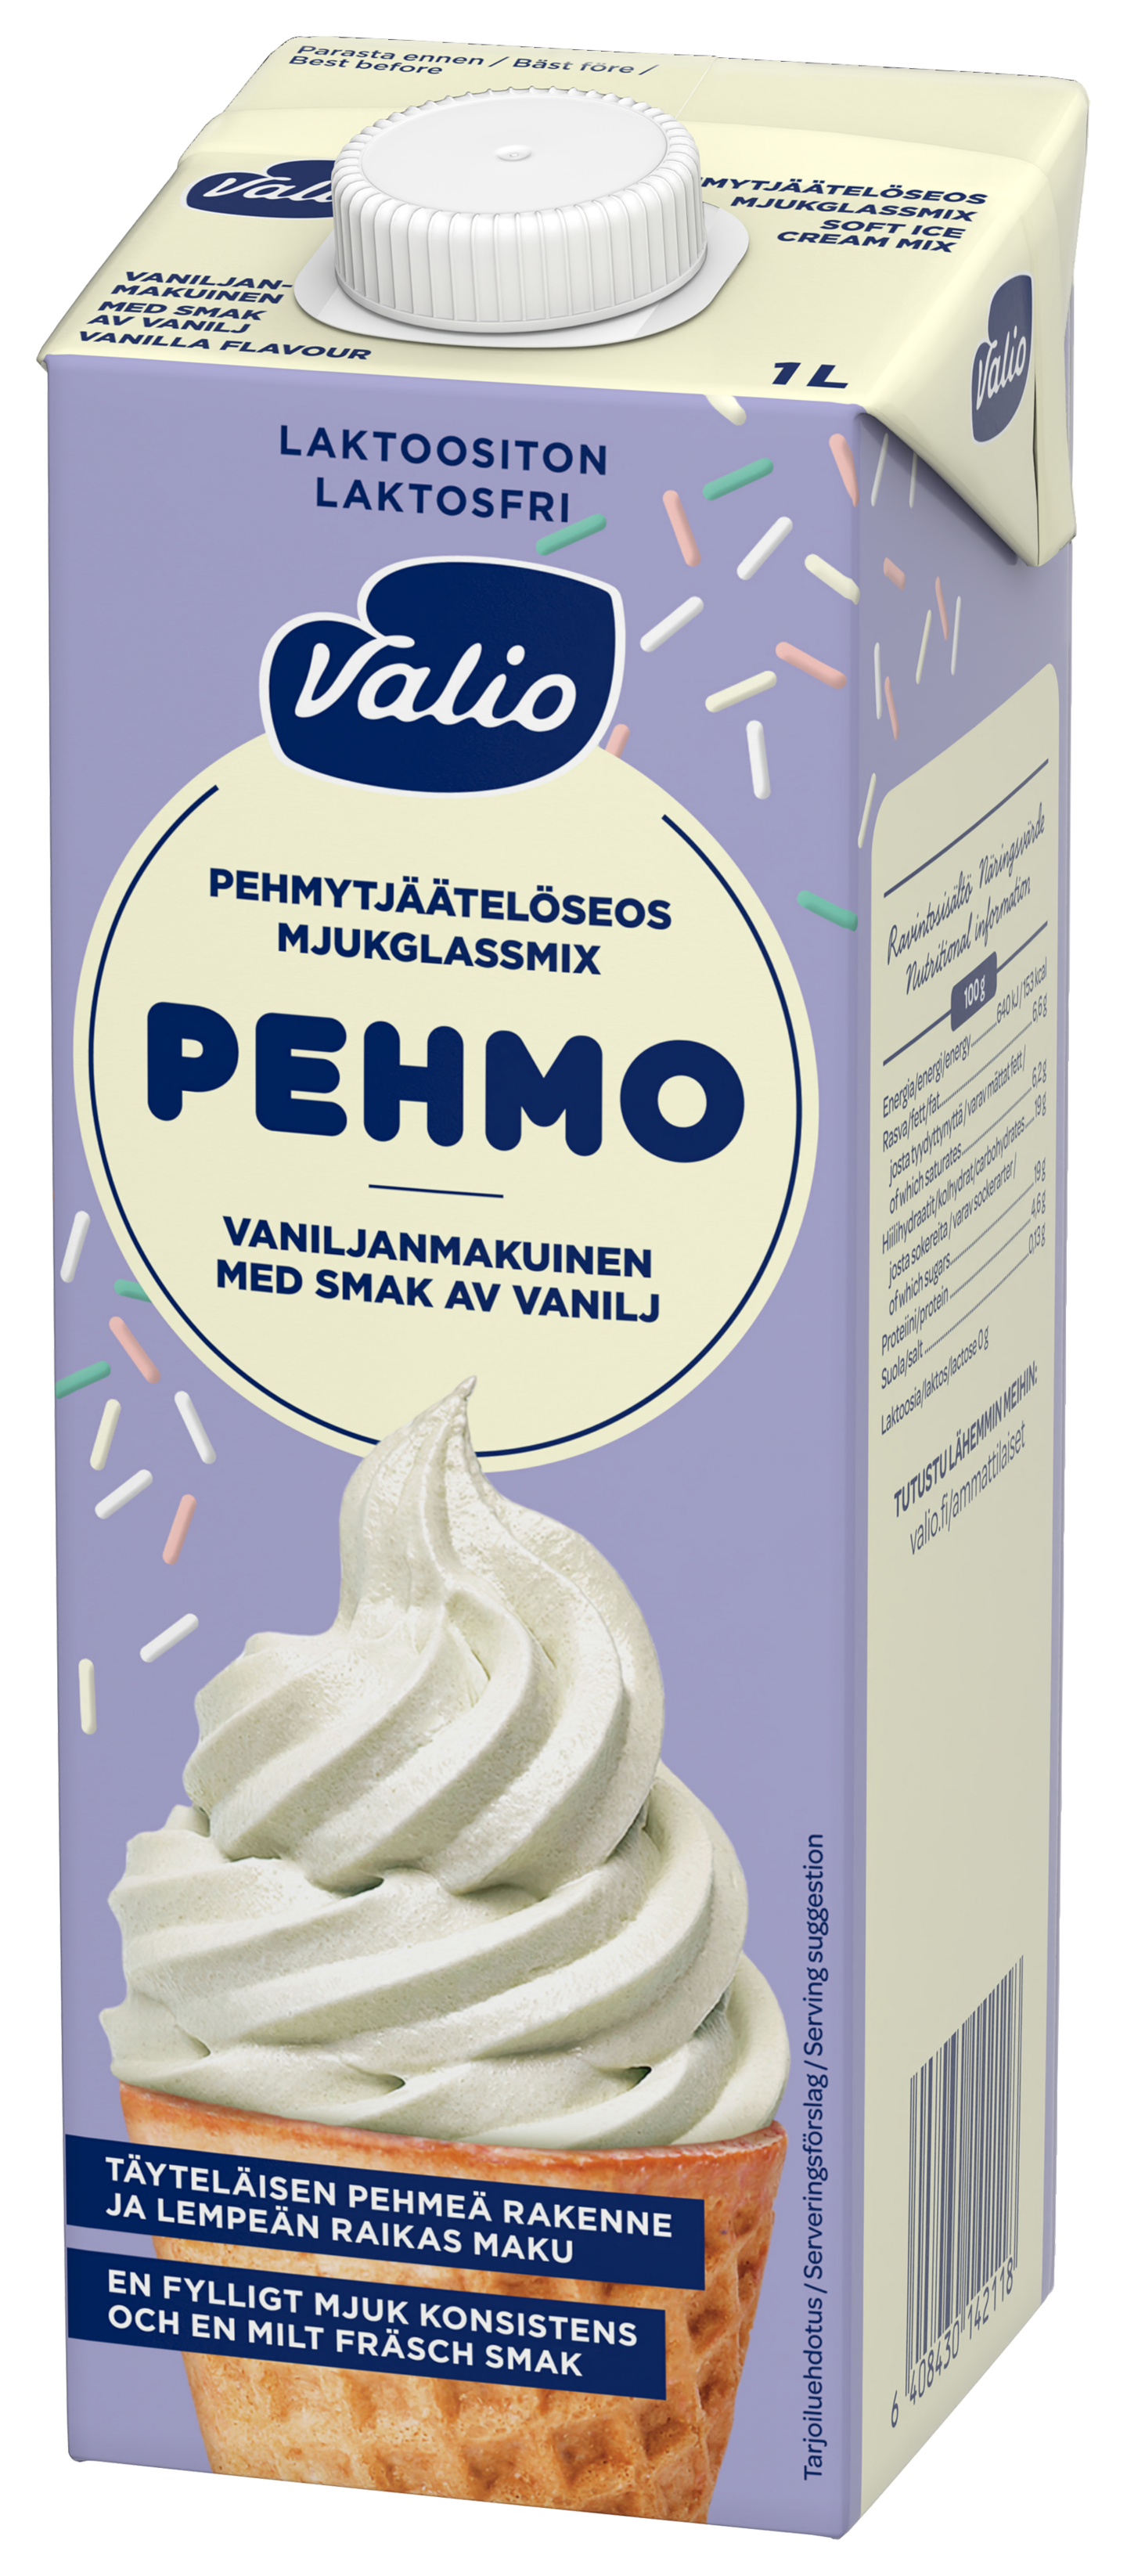 Valio Pehmo pehmytjäätelöseos vanilja 1l UHT laktoositon